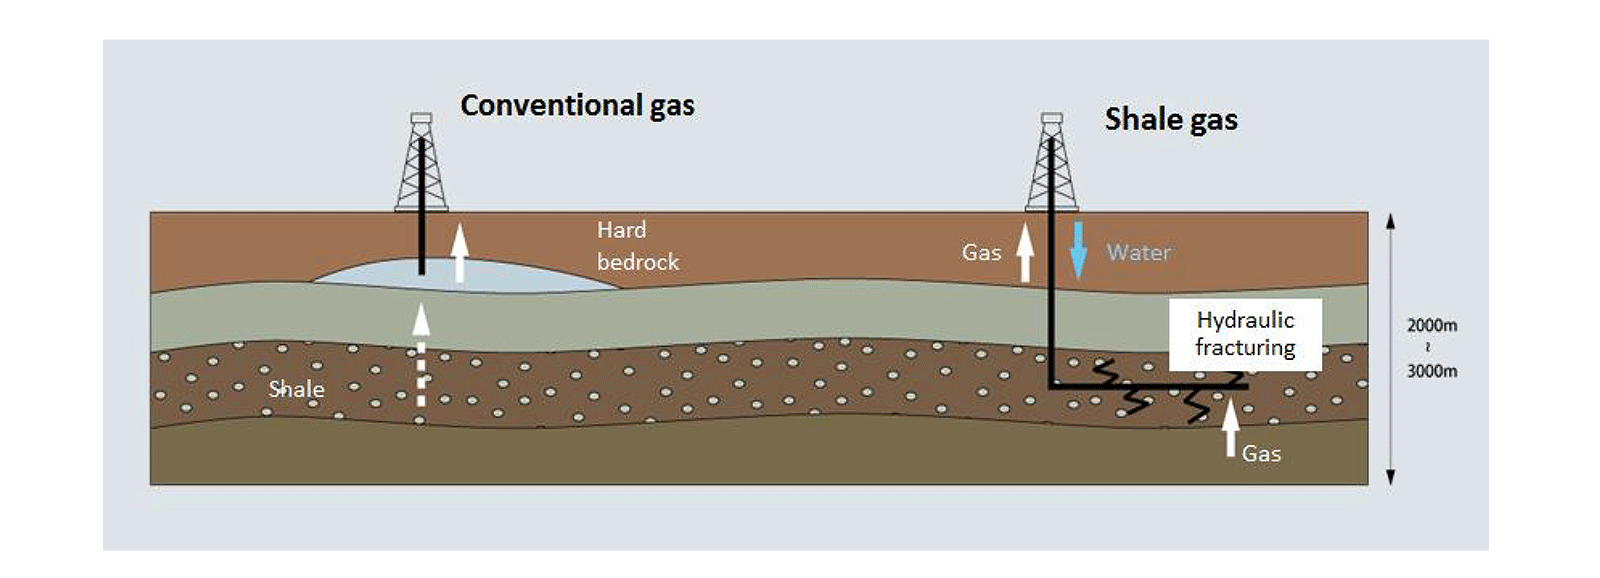 Shale gas